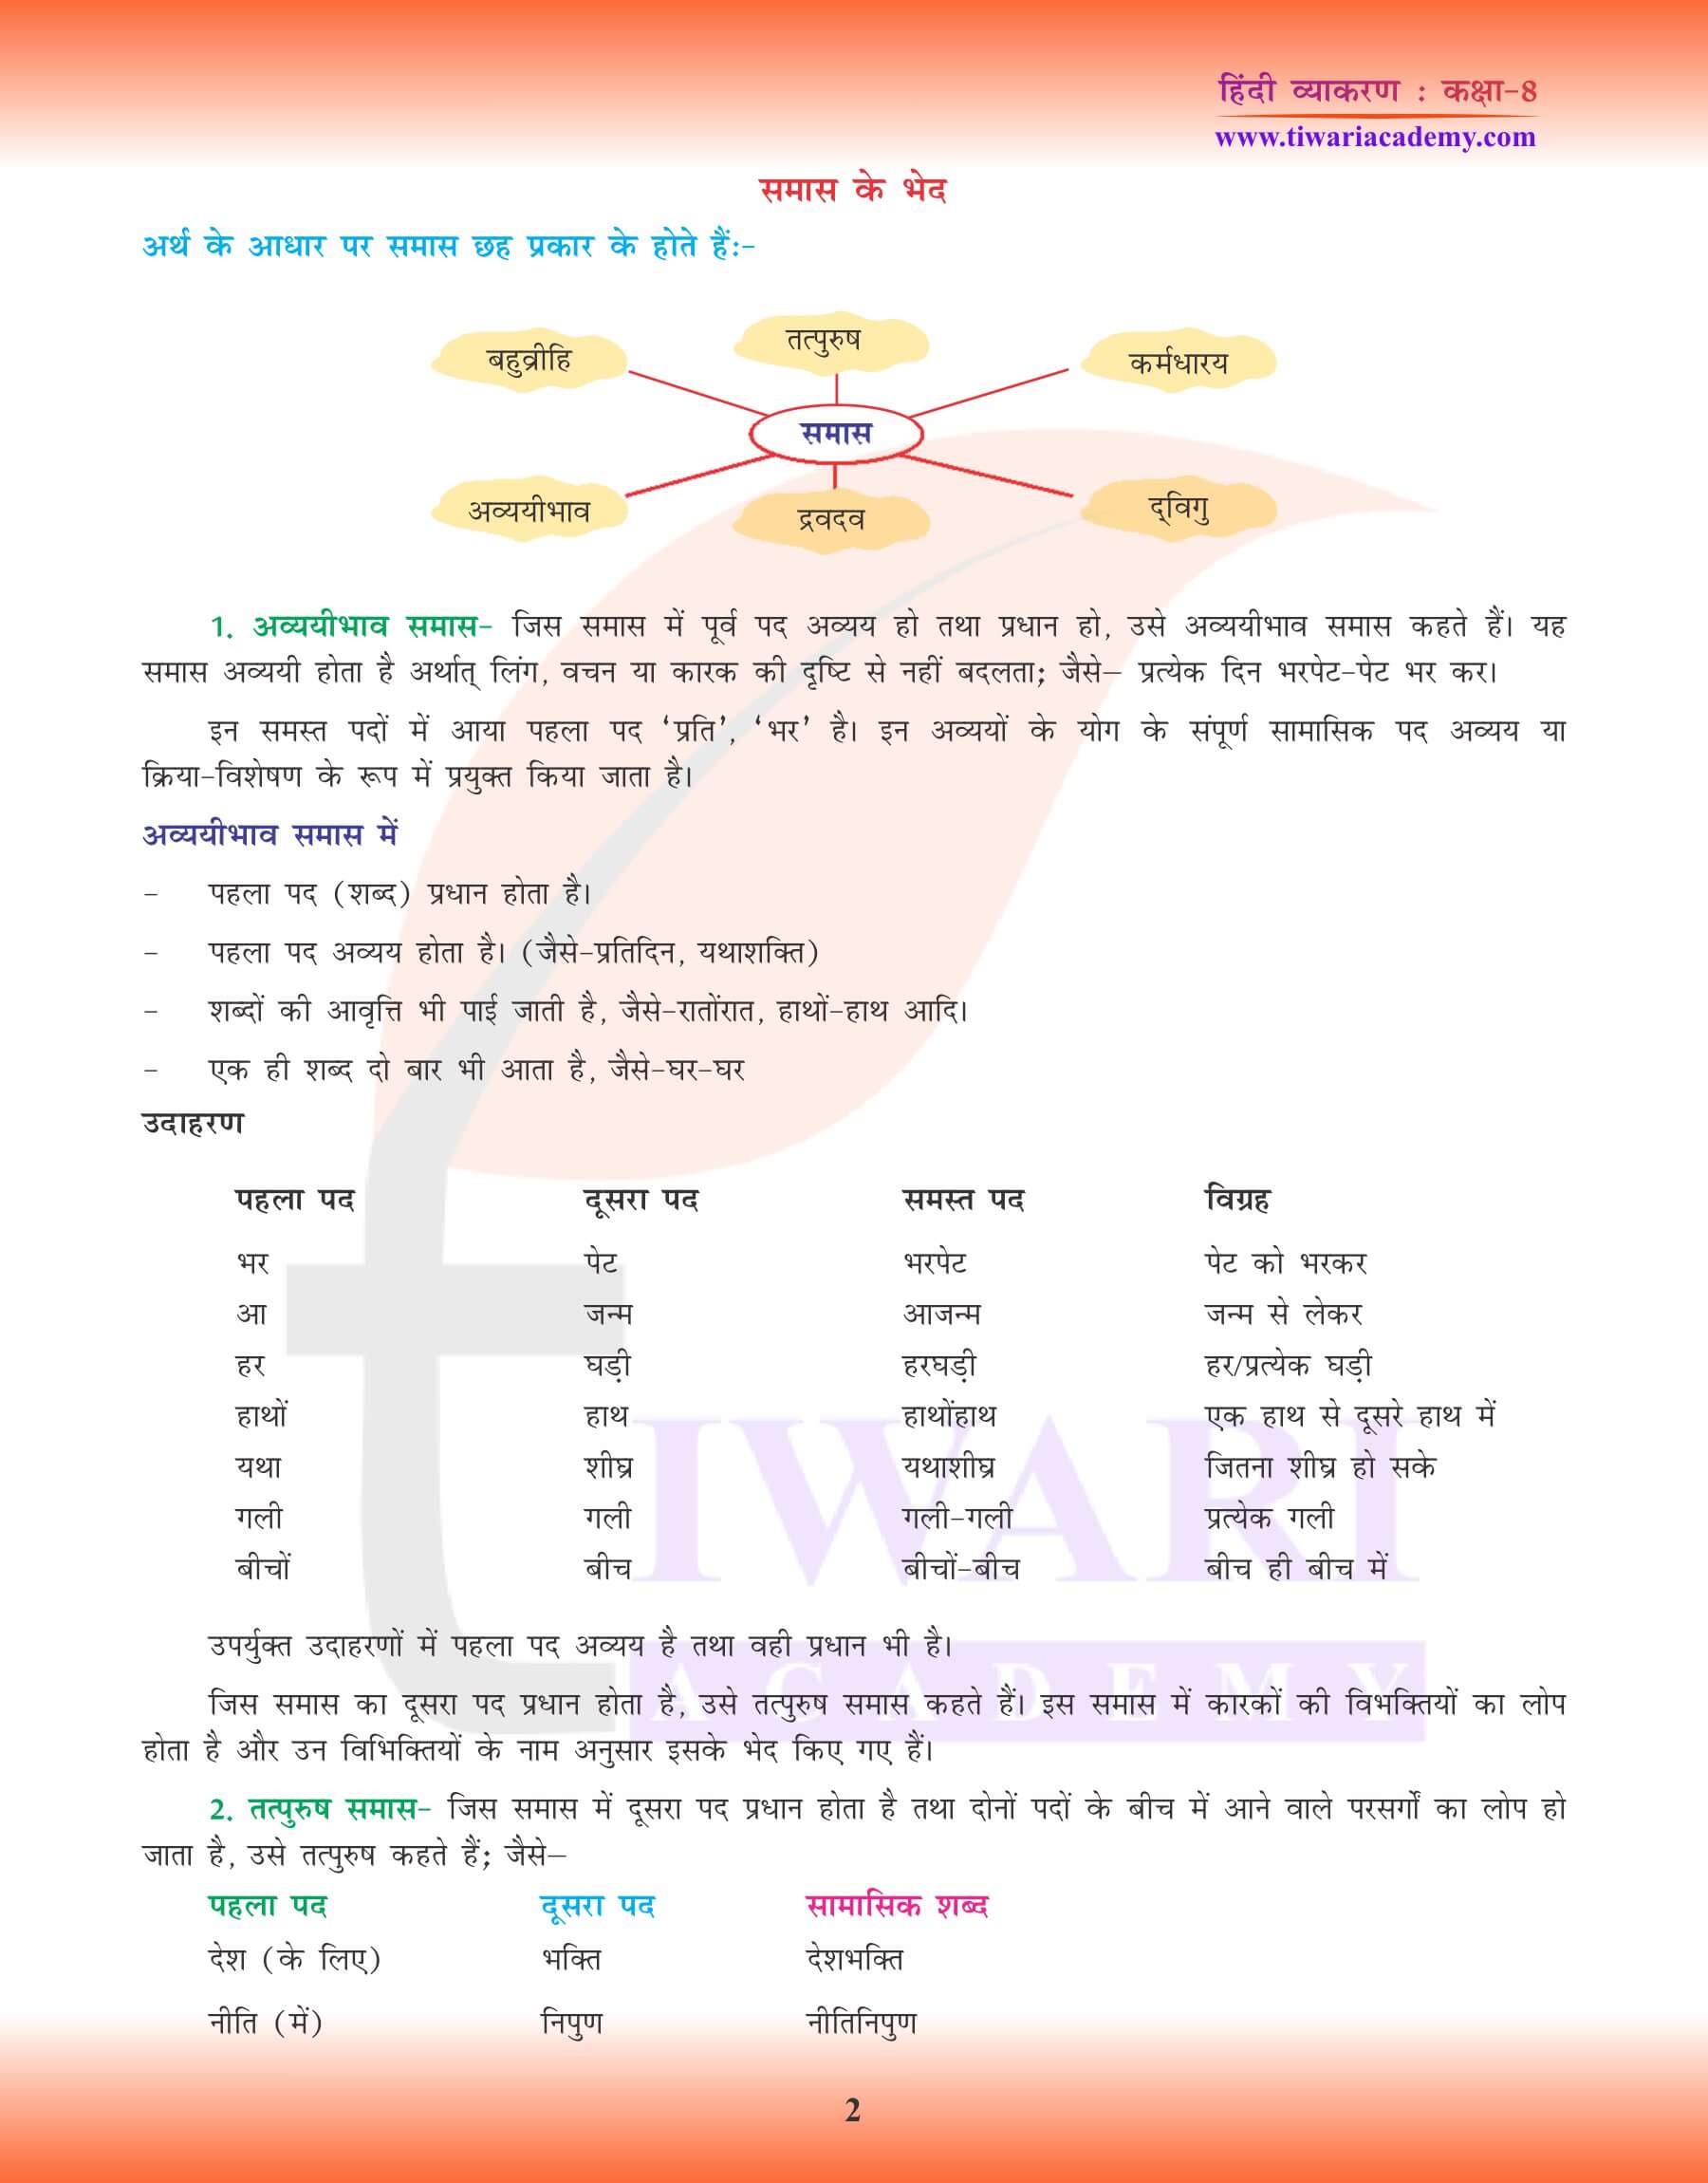 कक्षा 8 हिंदी व्याकरण समास के उदाहरण